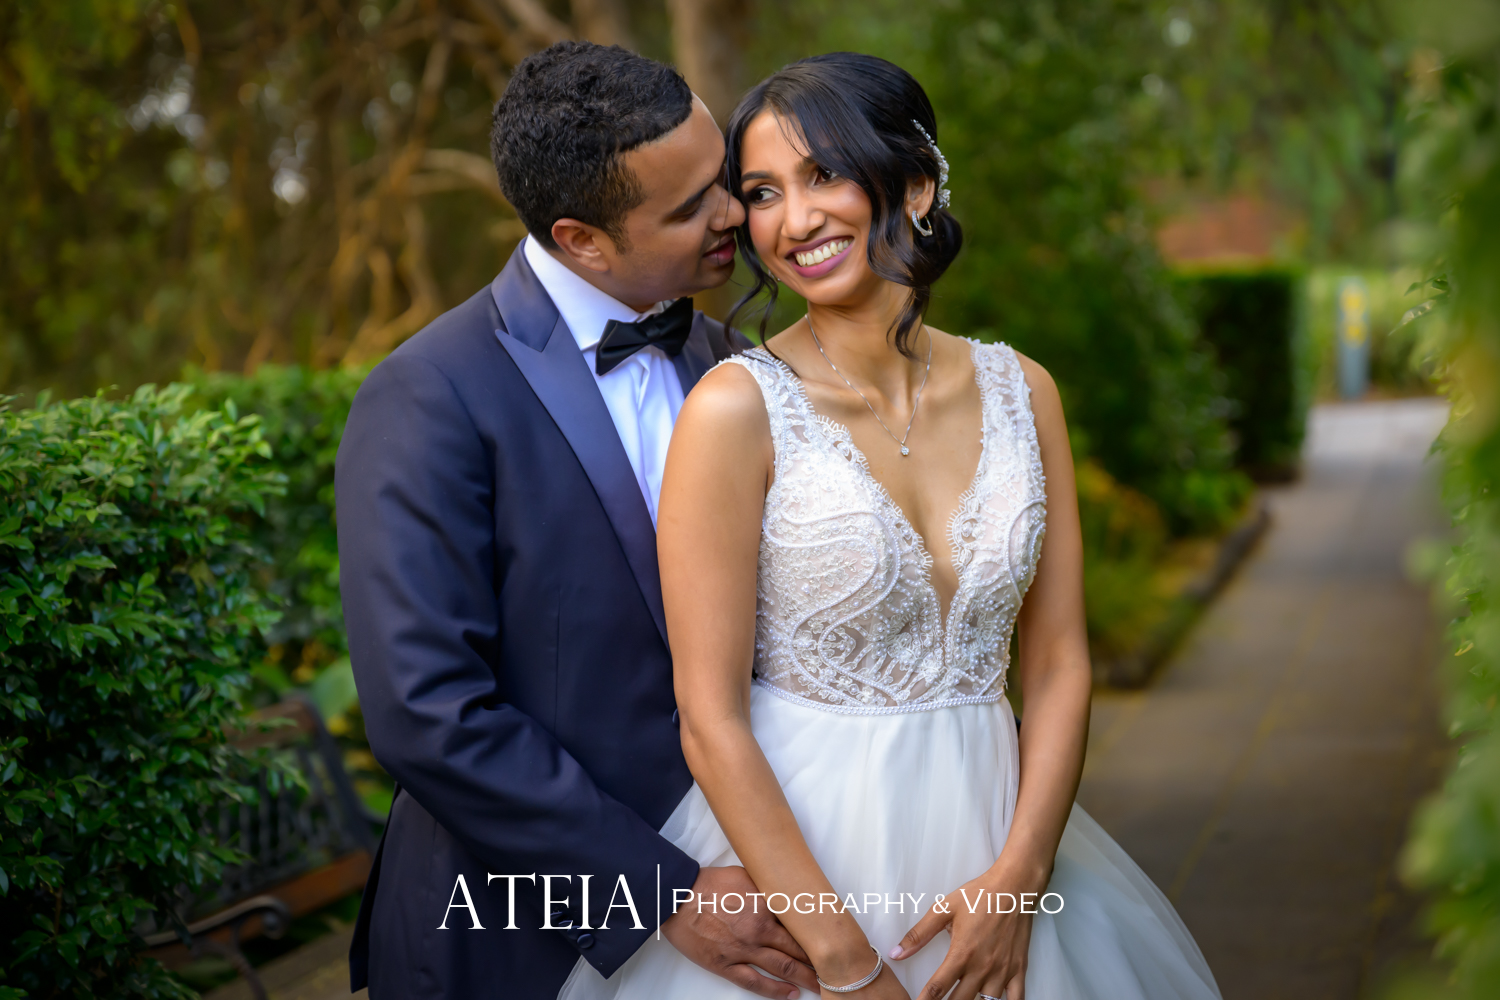 , Shavini and Dusha&#8217;s wedding photography at Leonda by the Yarra captured by ATEIA Photography &#038; Video